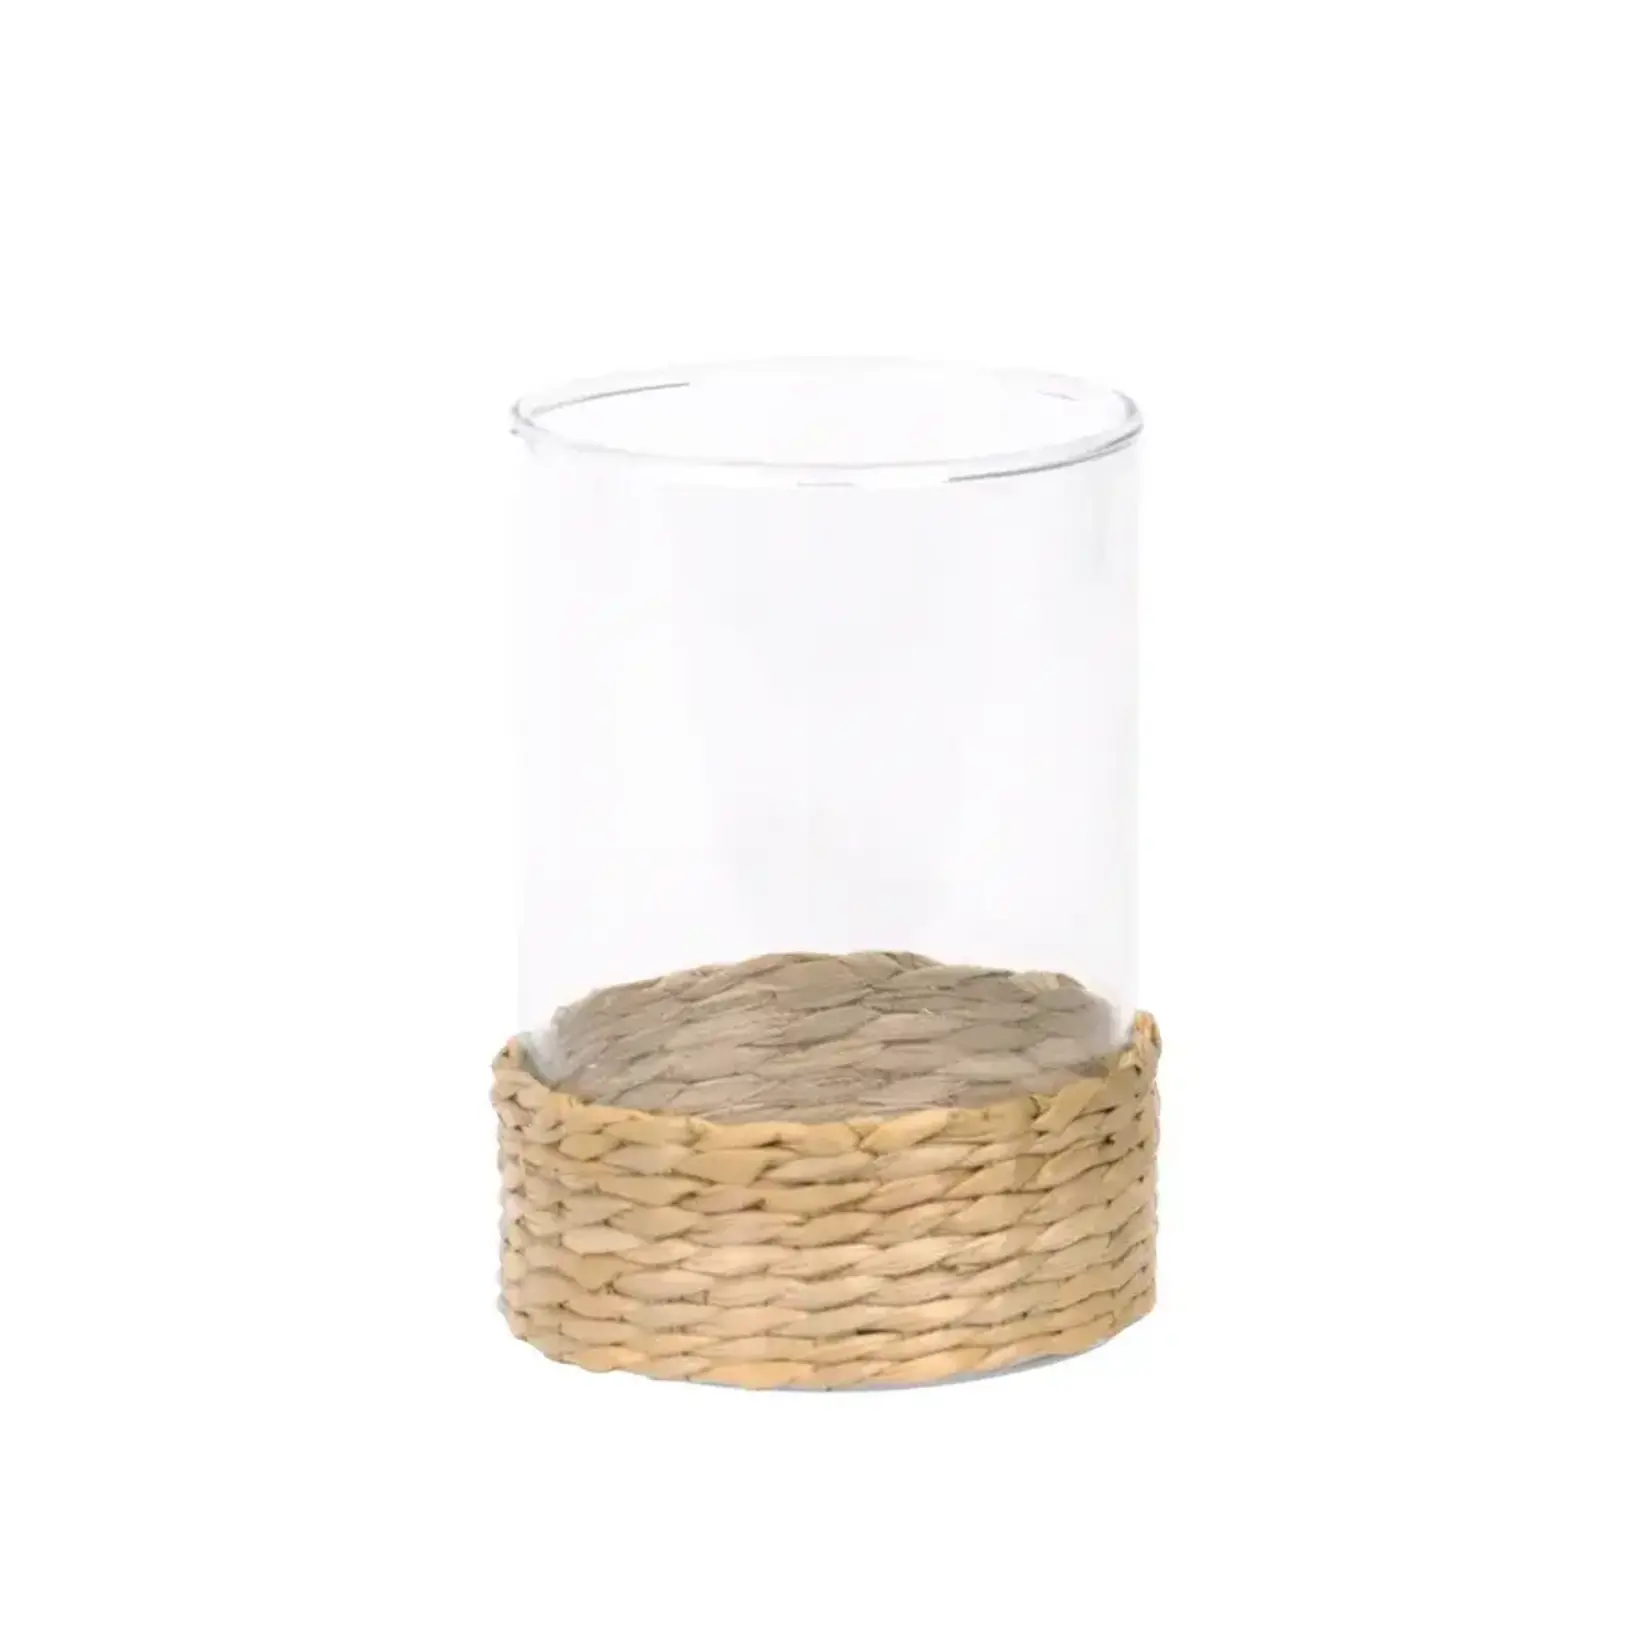 Jackson Clear Glass Candle Holder w/ Wicker - Medium